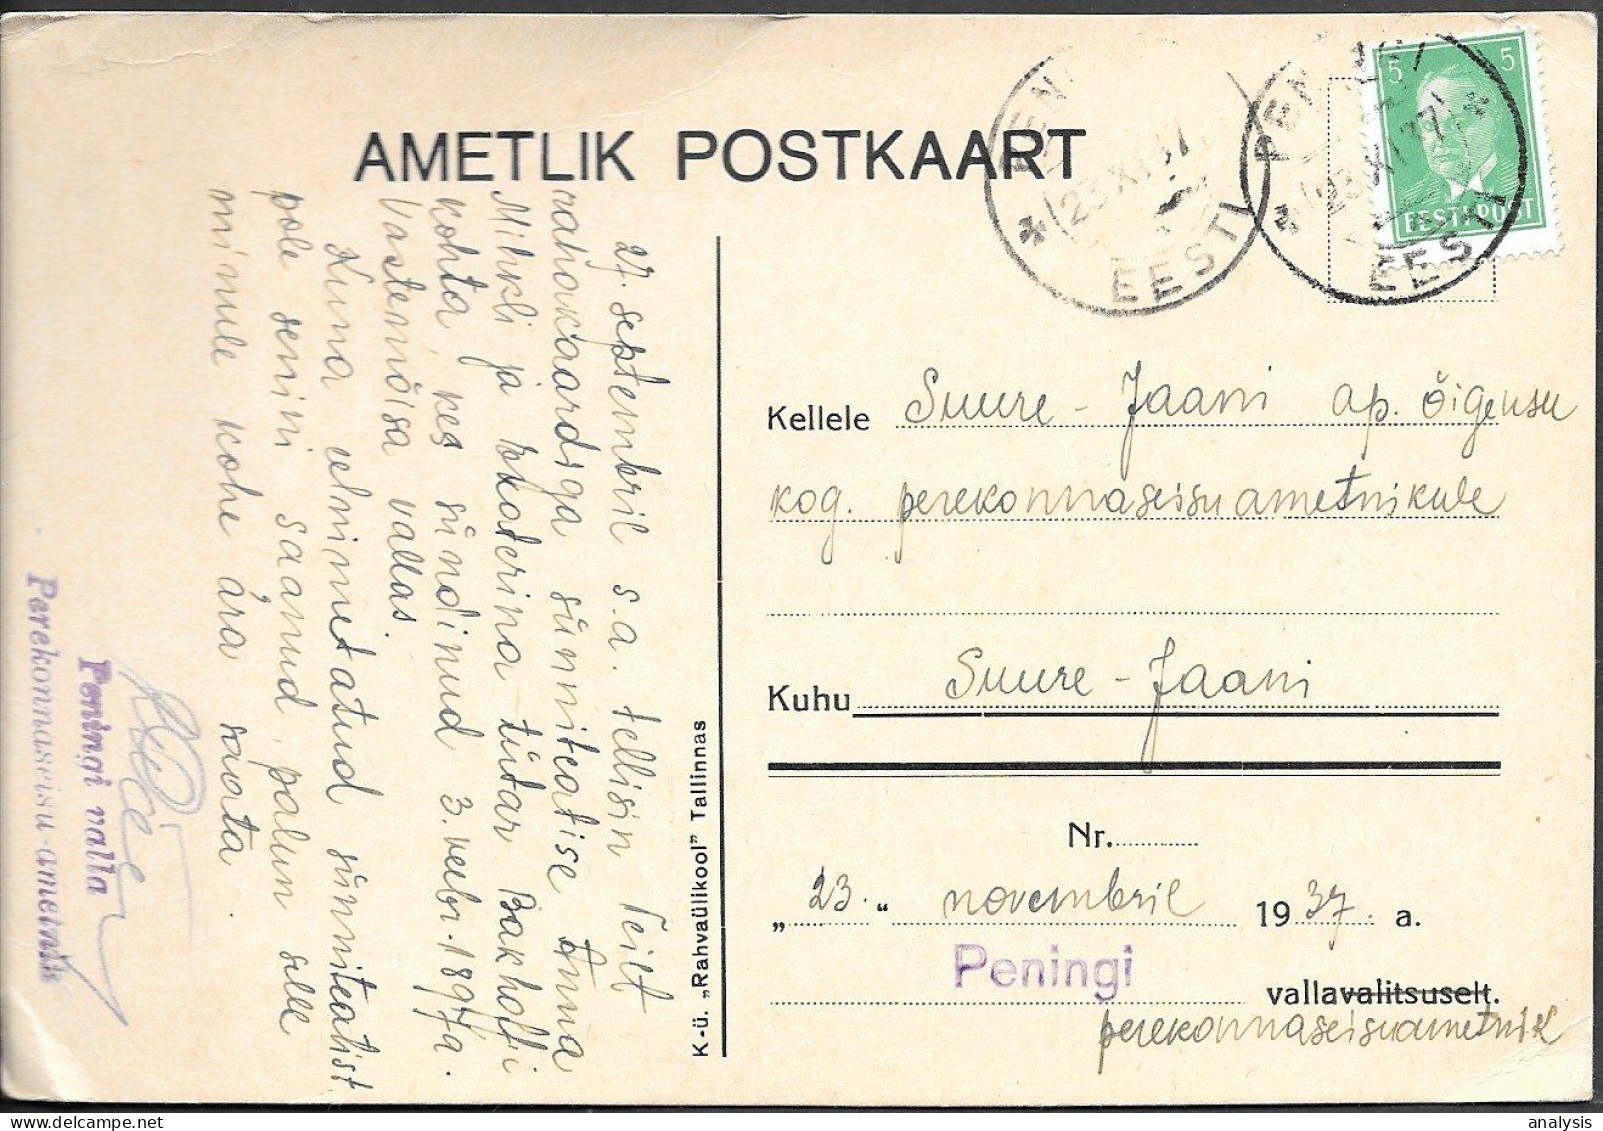 Estonia Peningi Municipal Government Official Postcard Mailed 1937. - Estonia